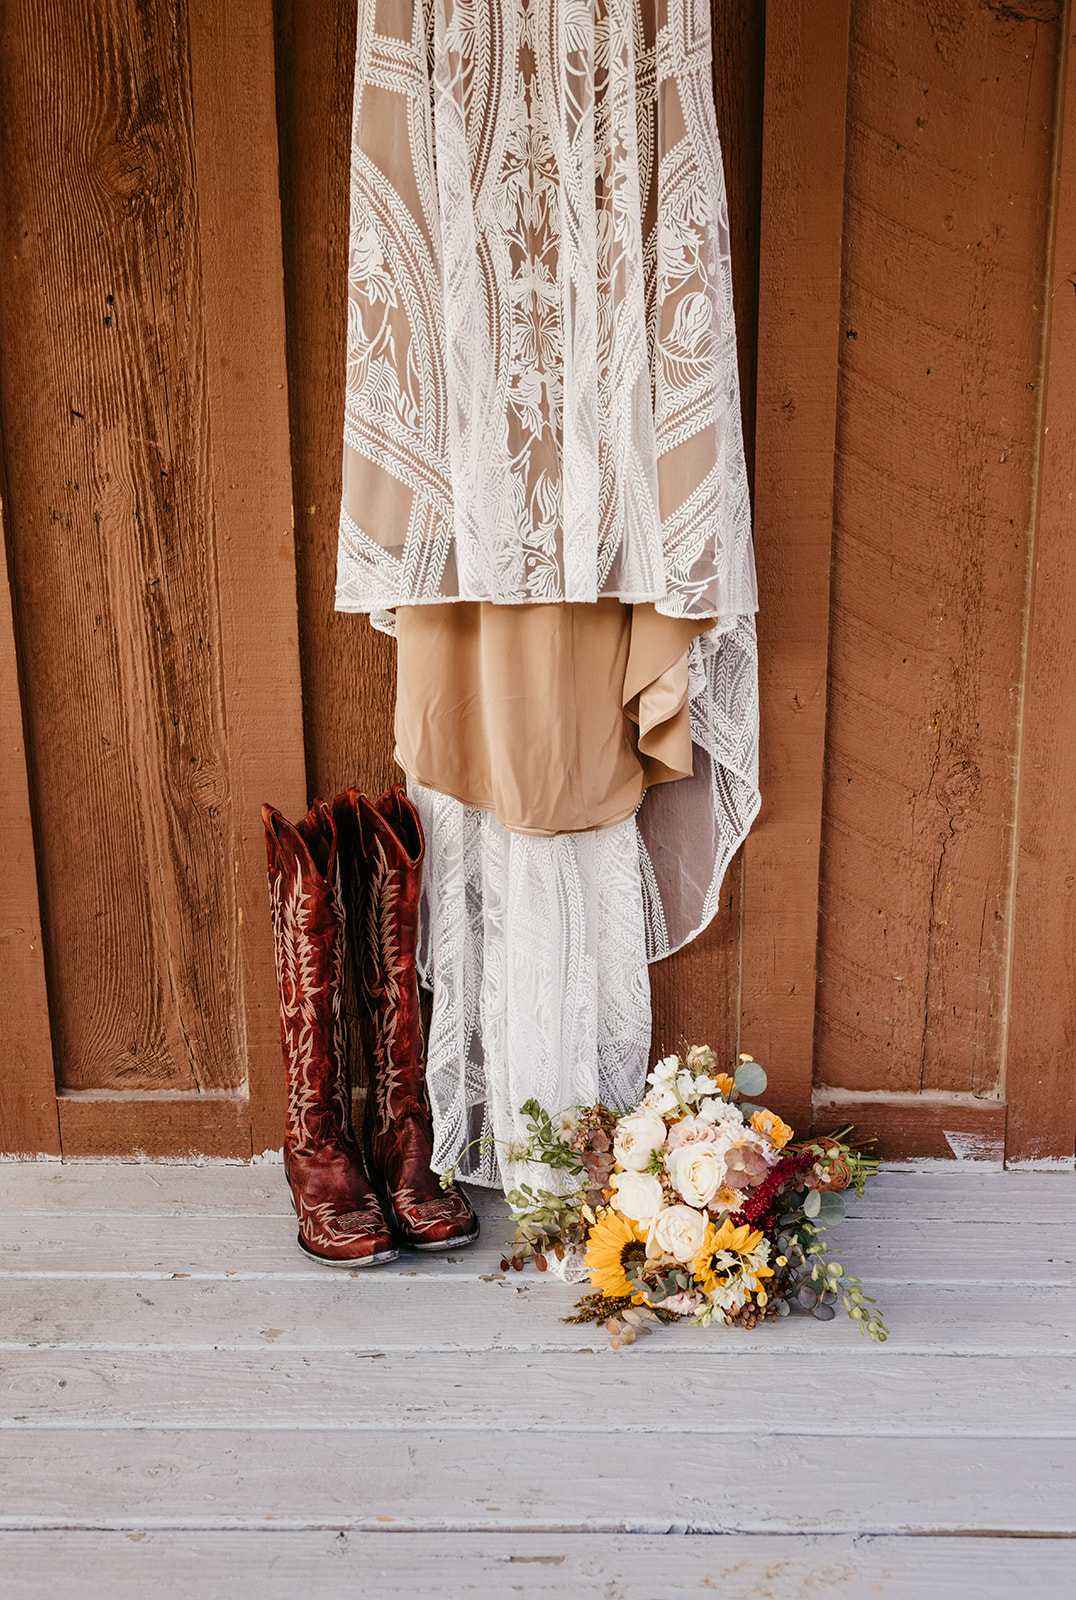 Rue De Sine Wedding dress from Swoon Bridal Shop in Reno Nevada